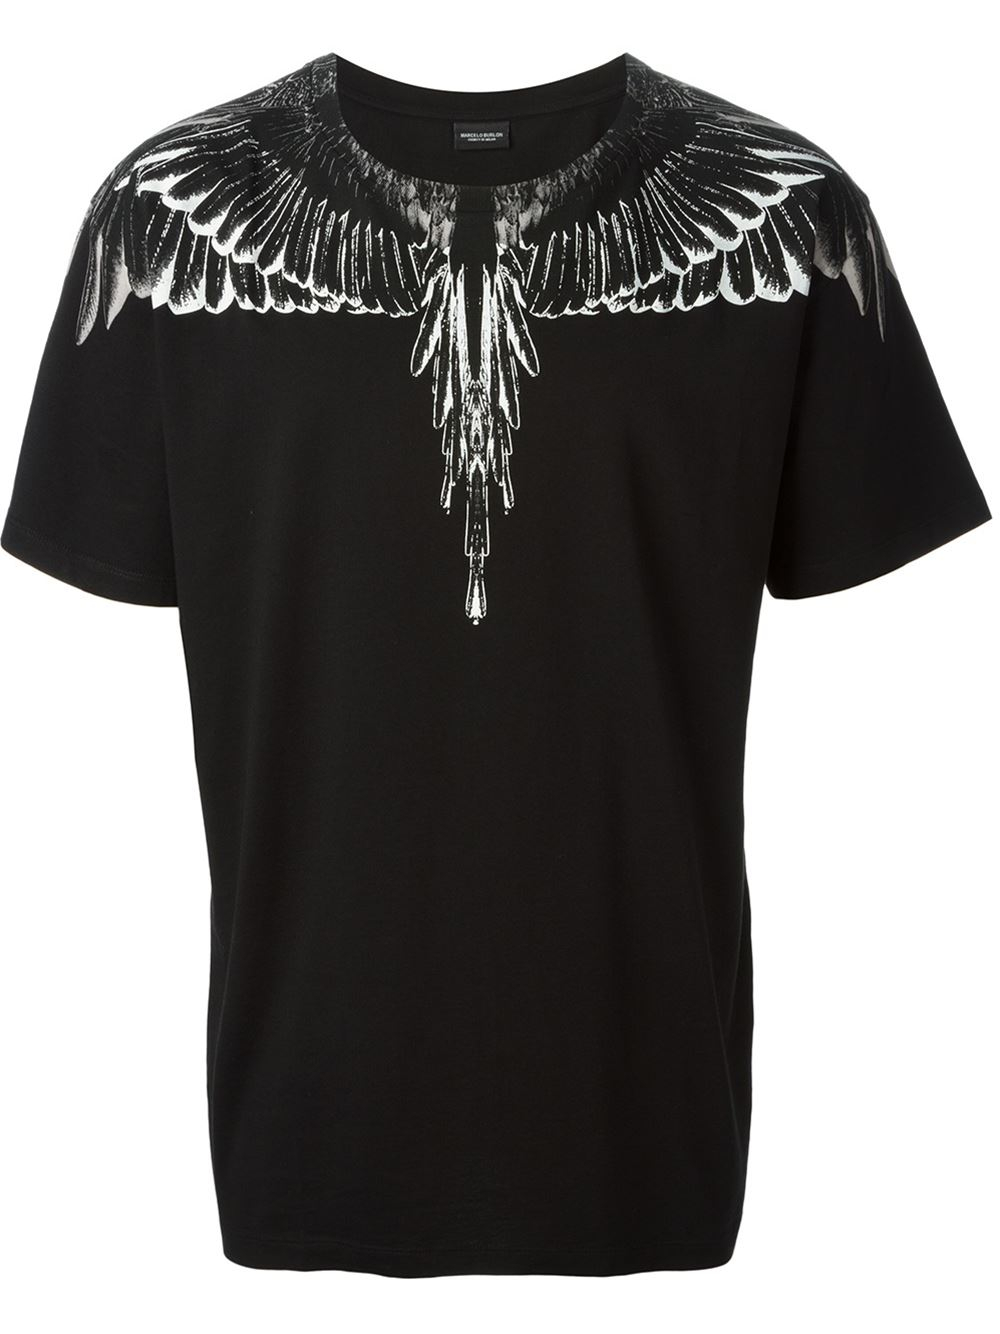 Lyst - Marcelo Burlon Eagle Print T-shirt in Black for Men